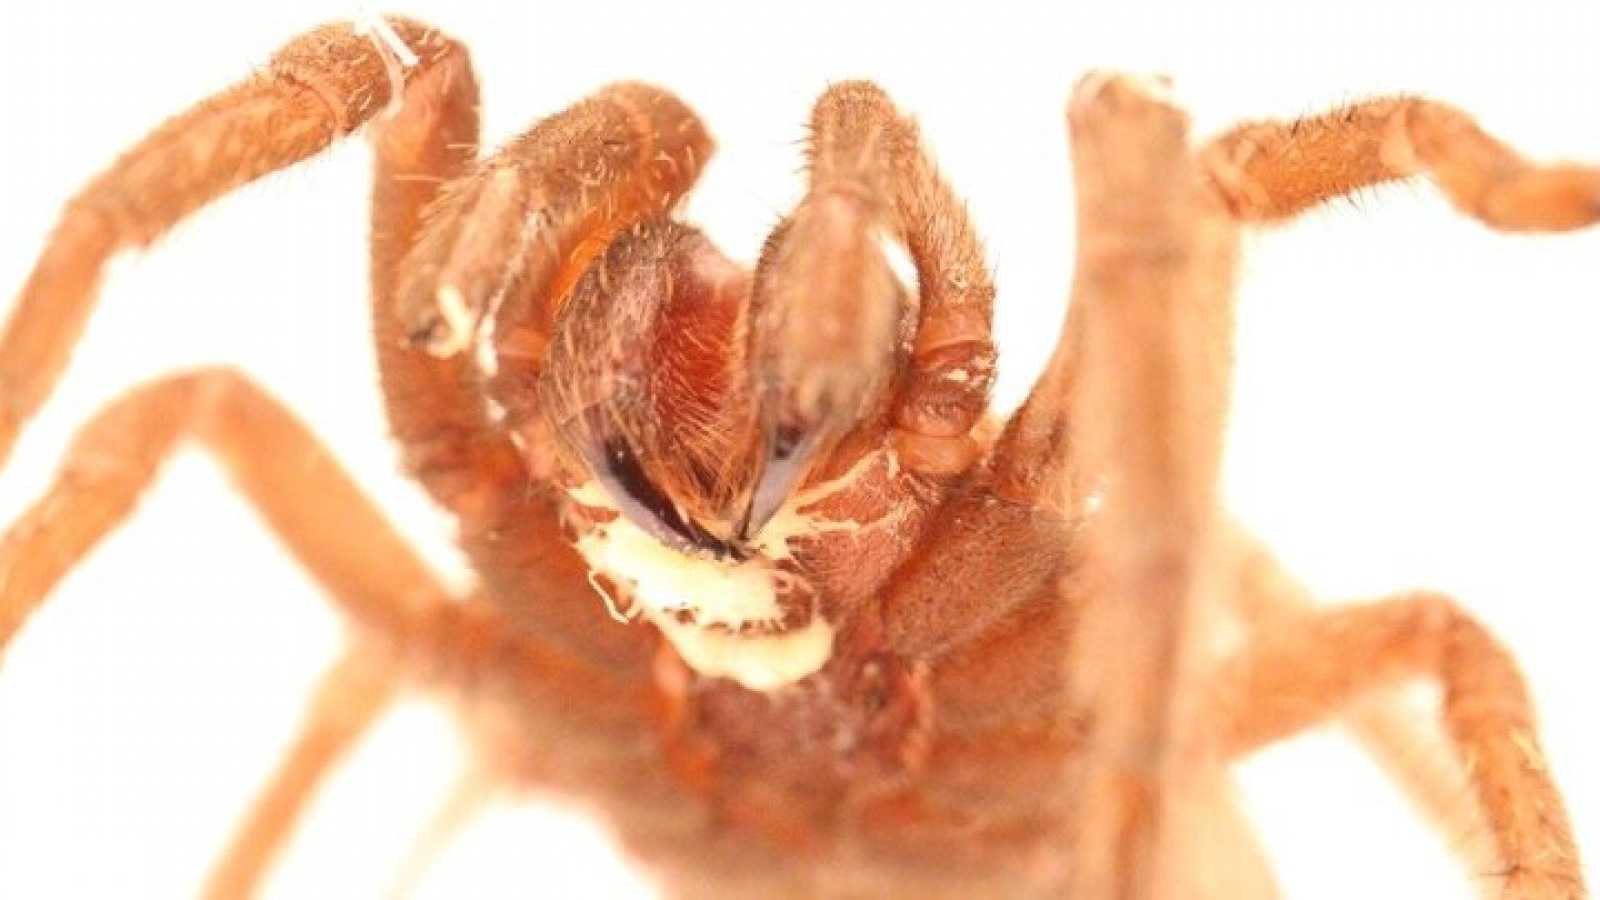 Червя, паразитирующего на тарантулах, назвали в честь Джеффа Дэниэлса